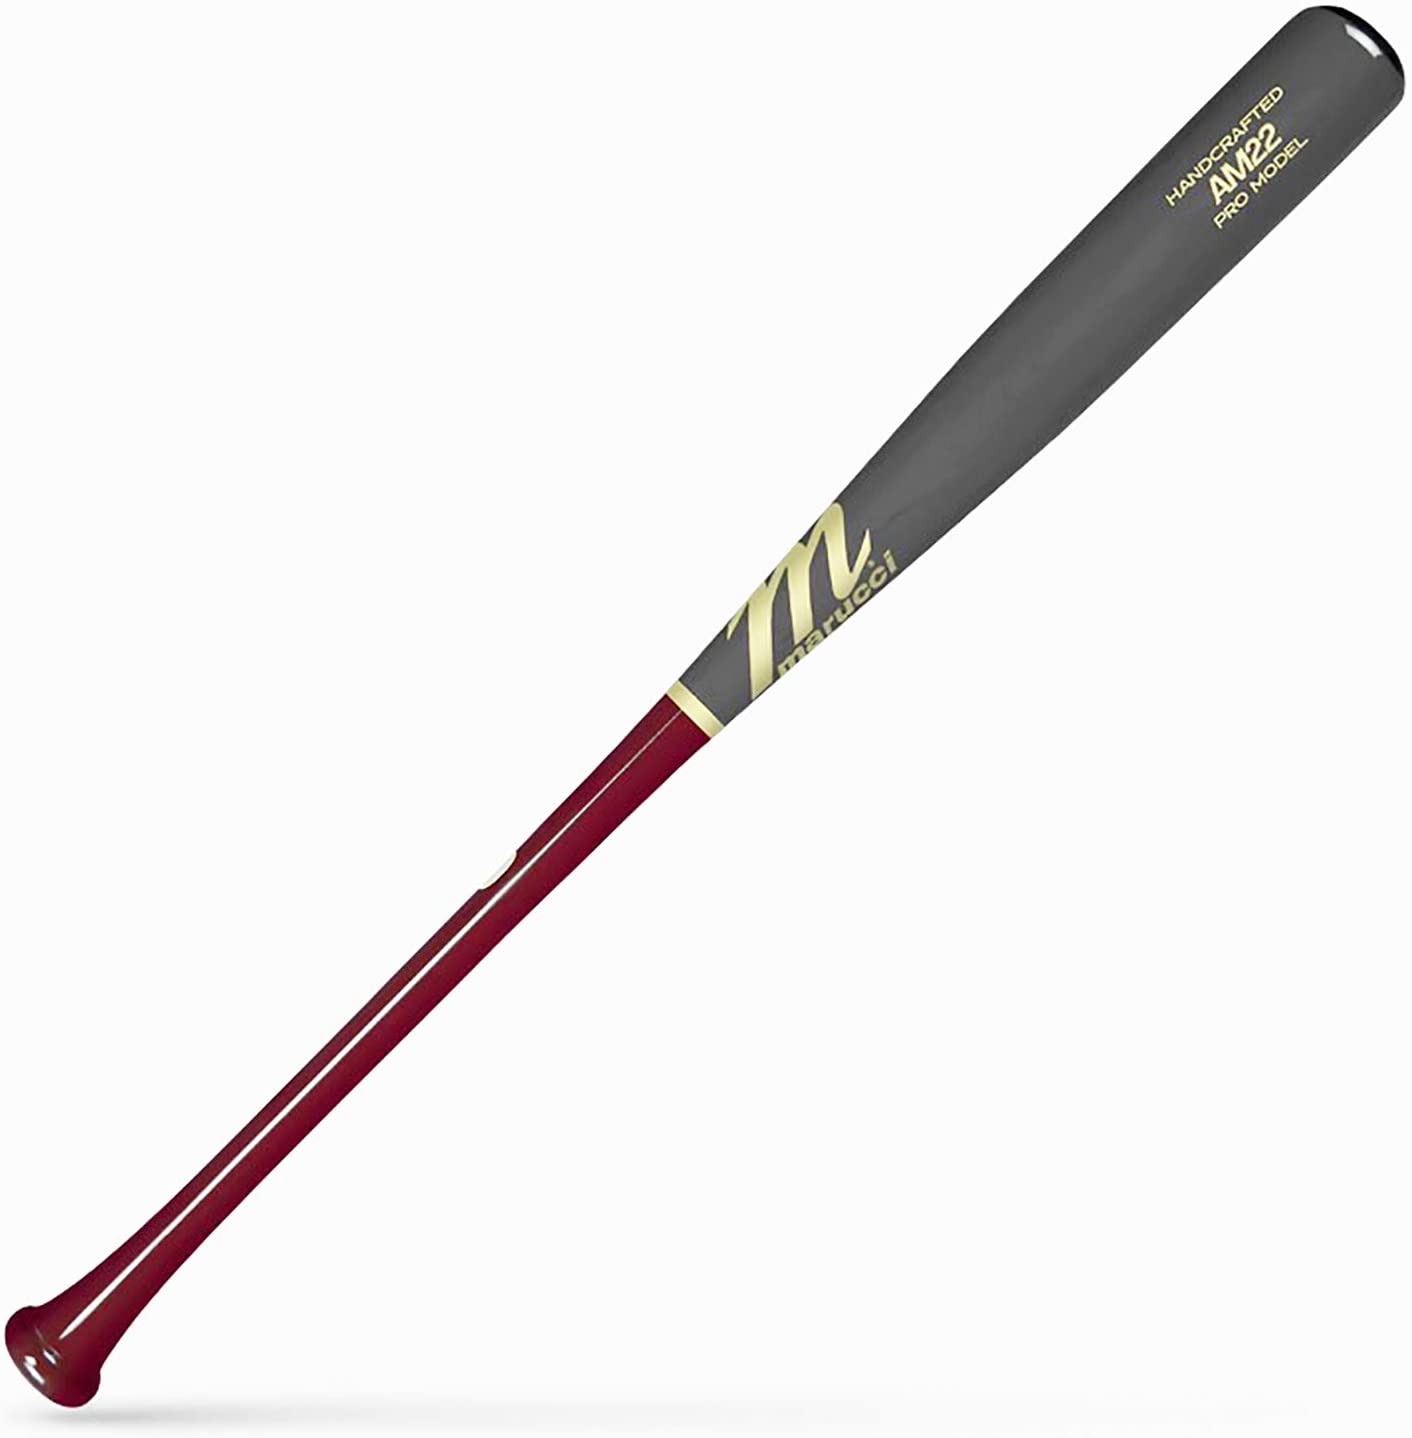 marucci-andrew-mccutchen-maple-wood-baseball-bat-cherry-fog-33-inch MVE2AM22C-CHFG-33 Marucci  Hit for average Hit for power The AM22 Pro Model wood